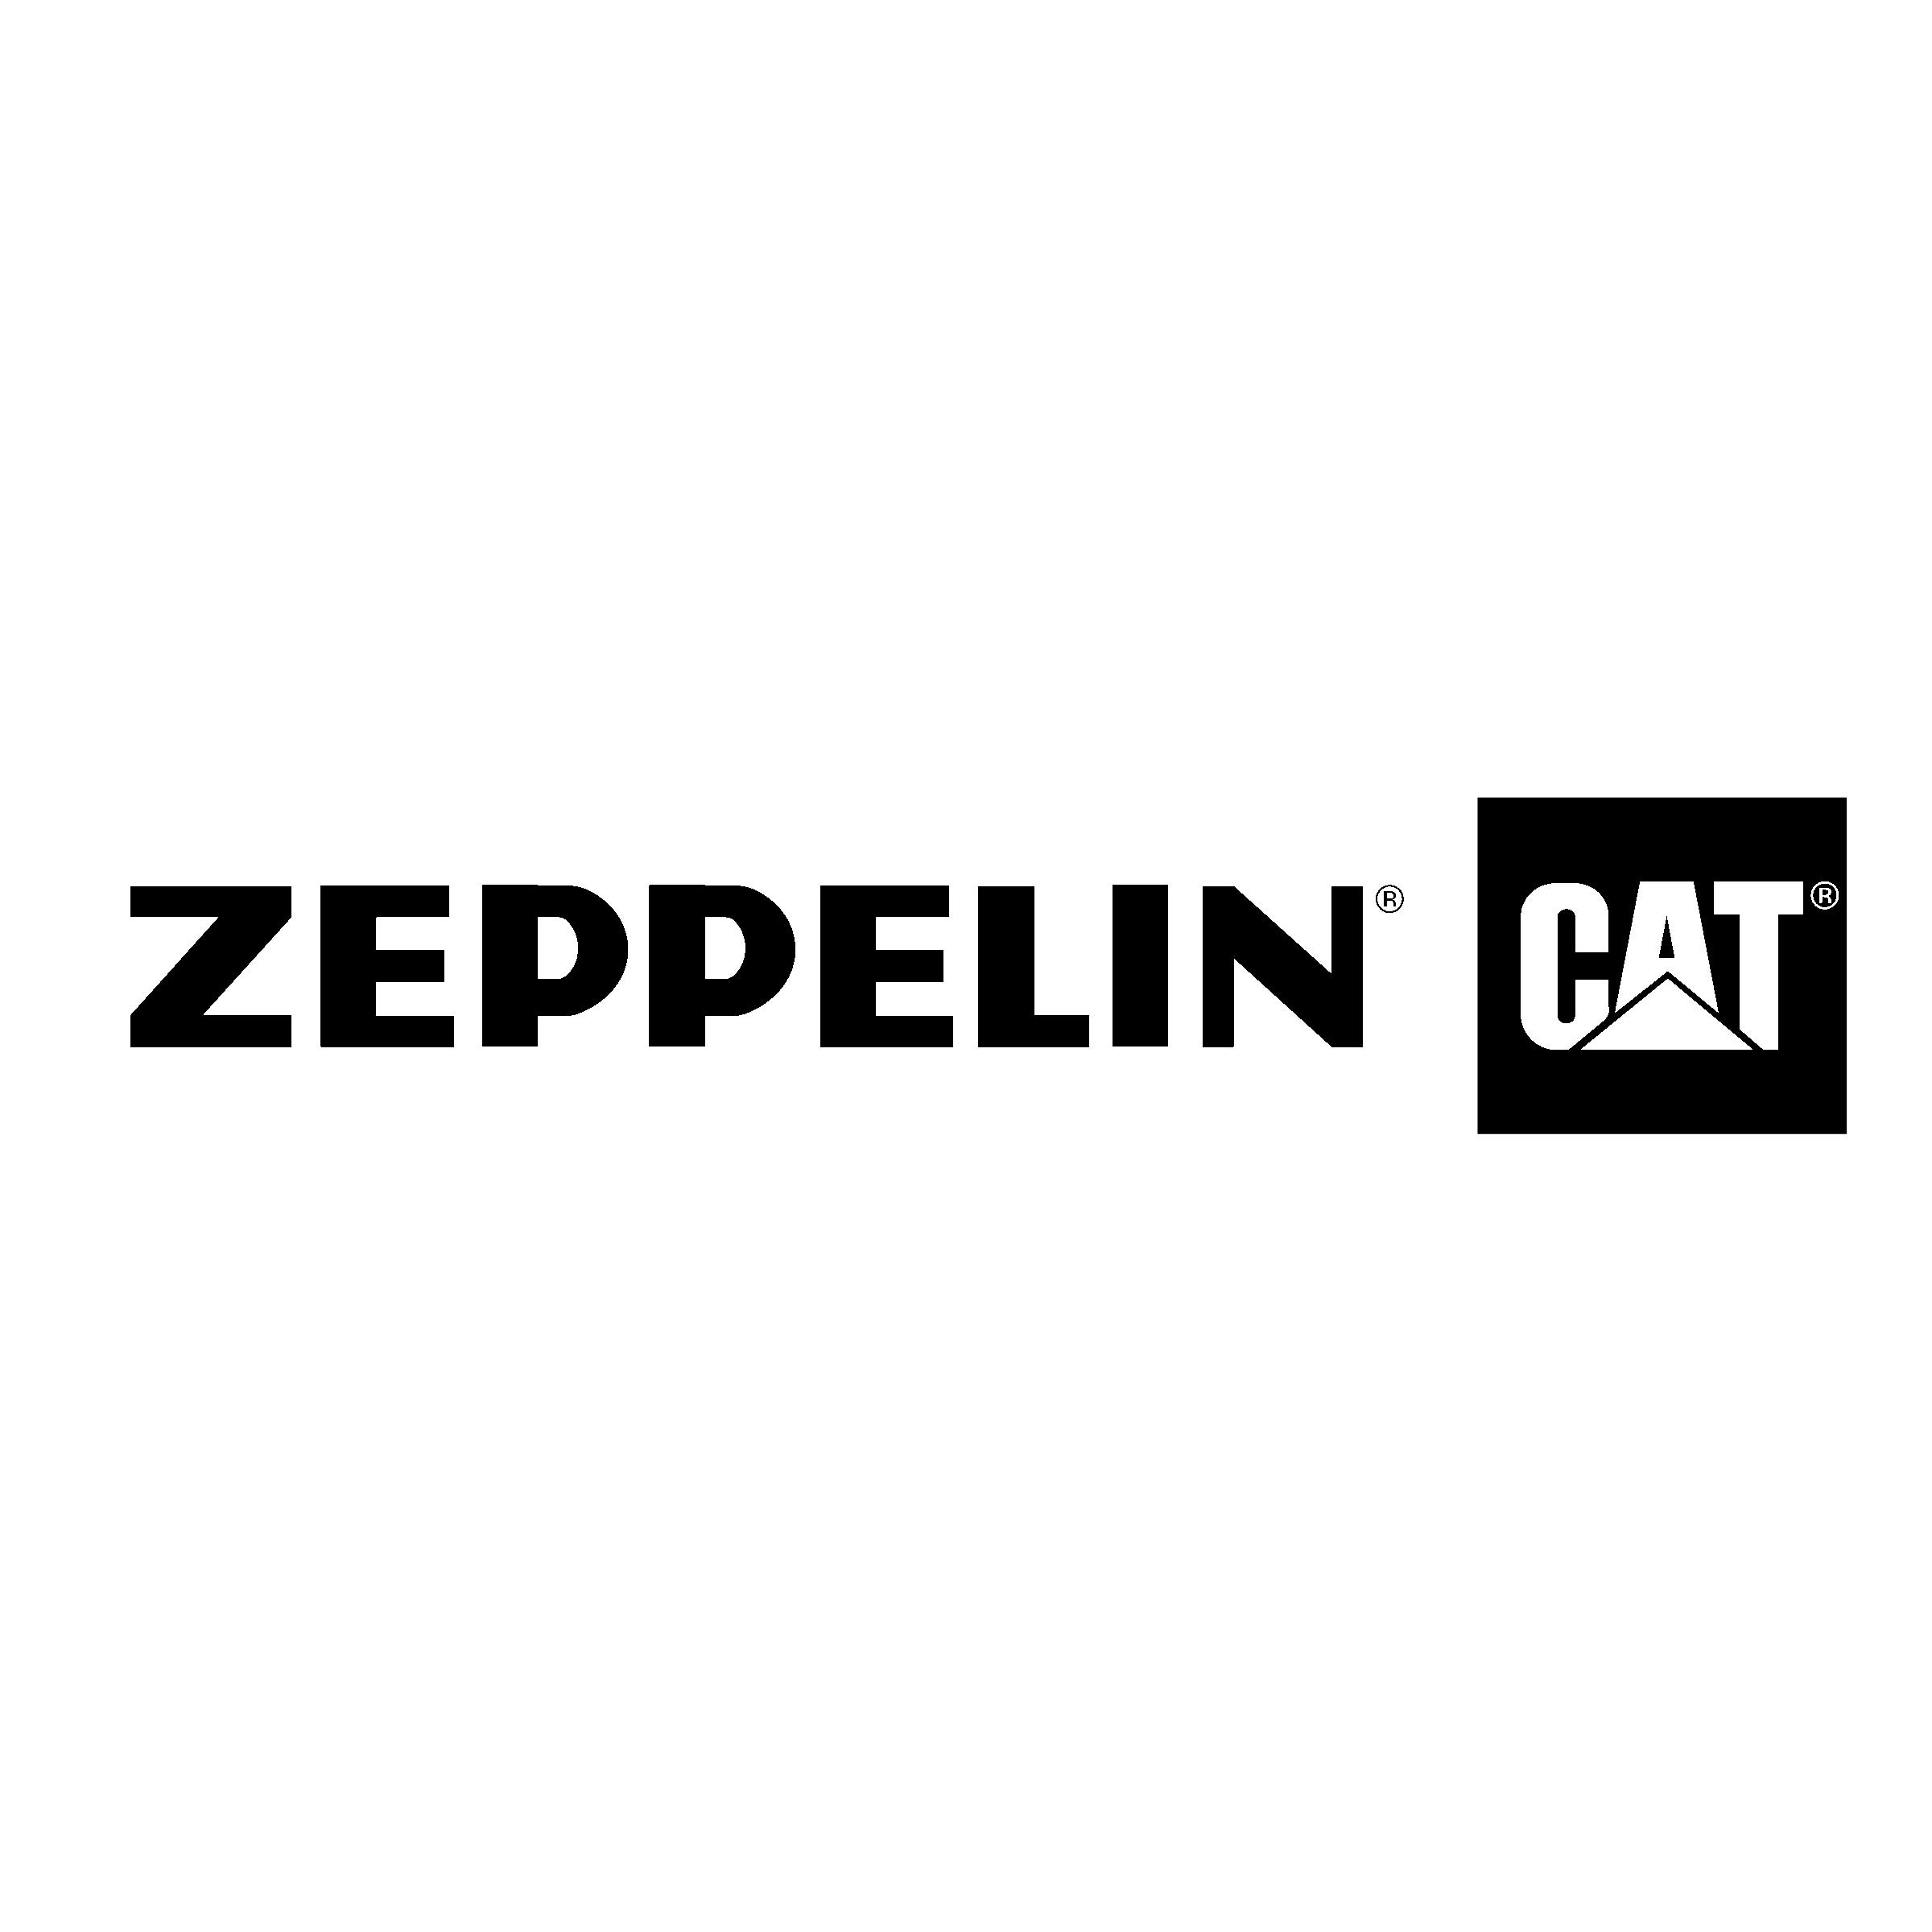 Black and White Caterpillar Logo - Zeppelin Caterpillar Logo PNG Transparent & SVG Vector - Freebie Supply